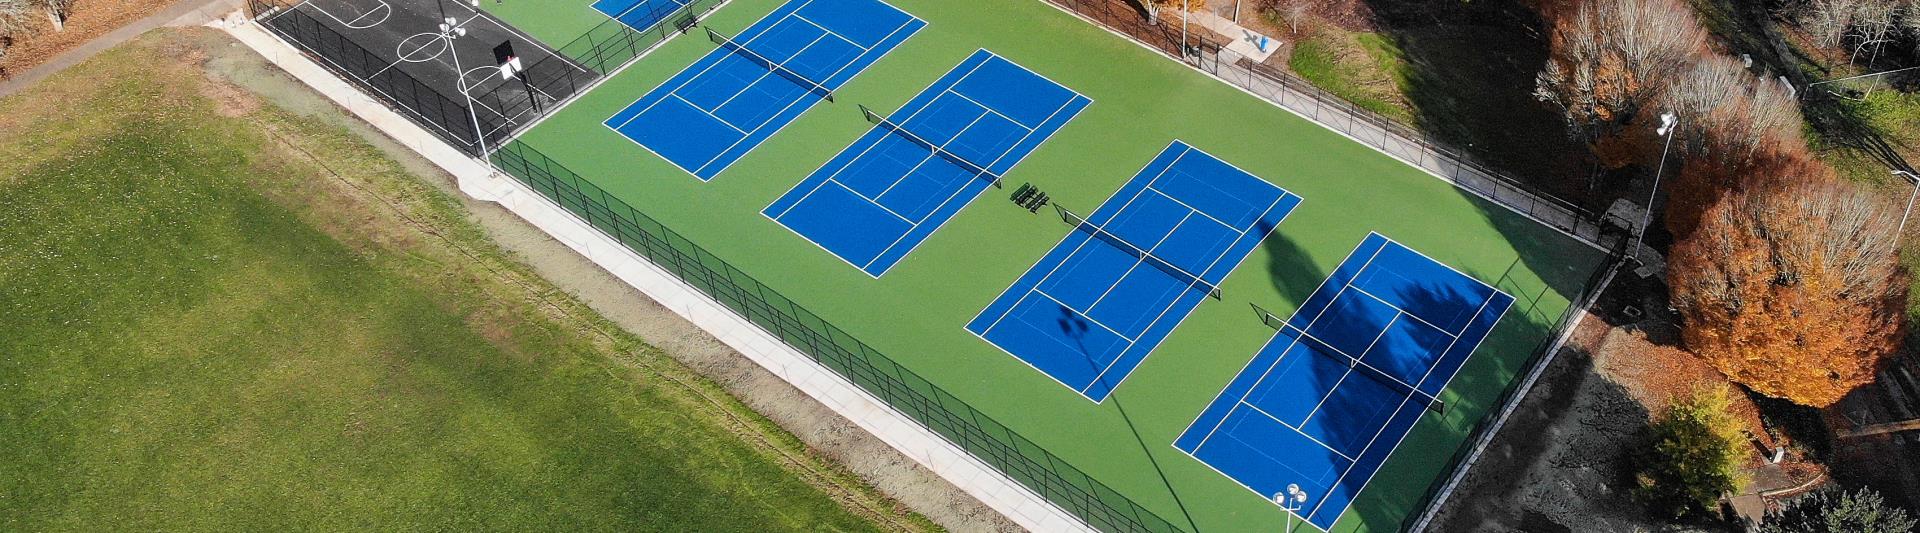 2022 Tennis Court Orchard Heights in West Salem